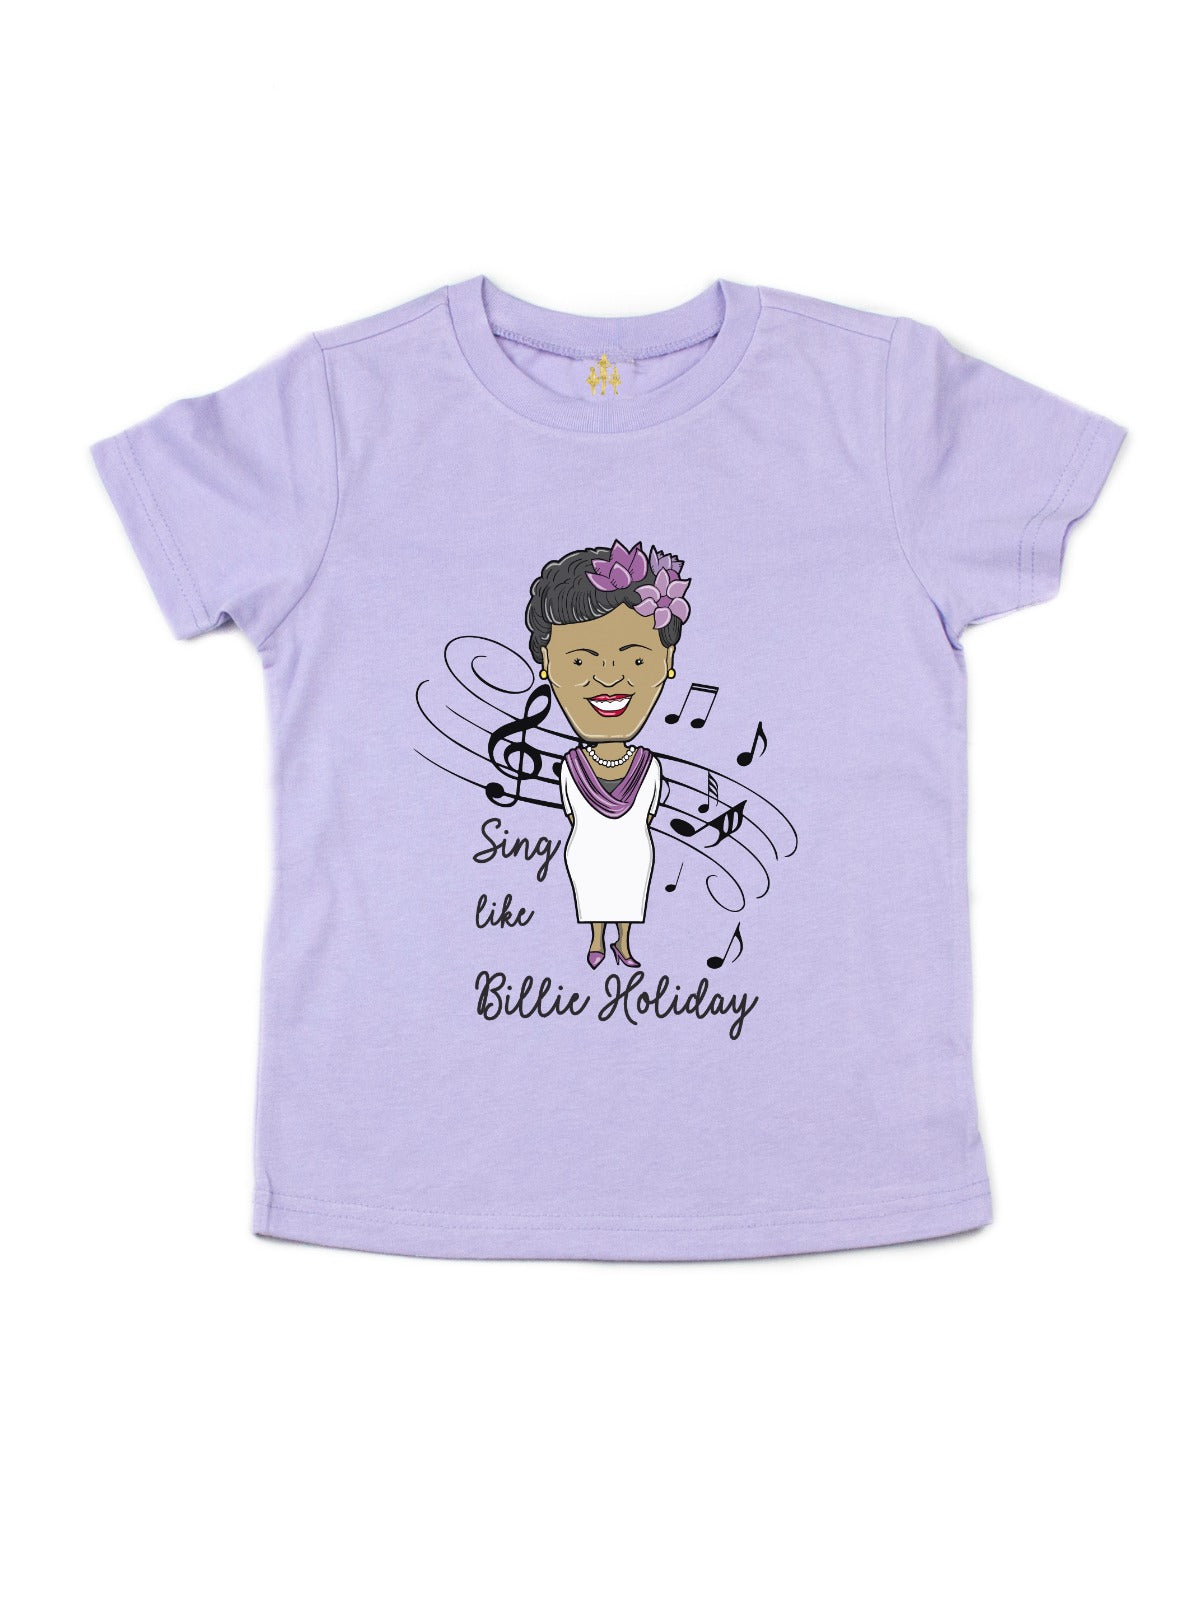 Sing like Billie Holiday Kids Black History Shirt 